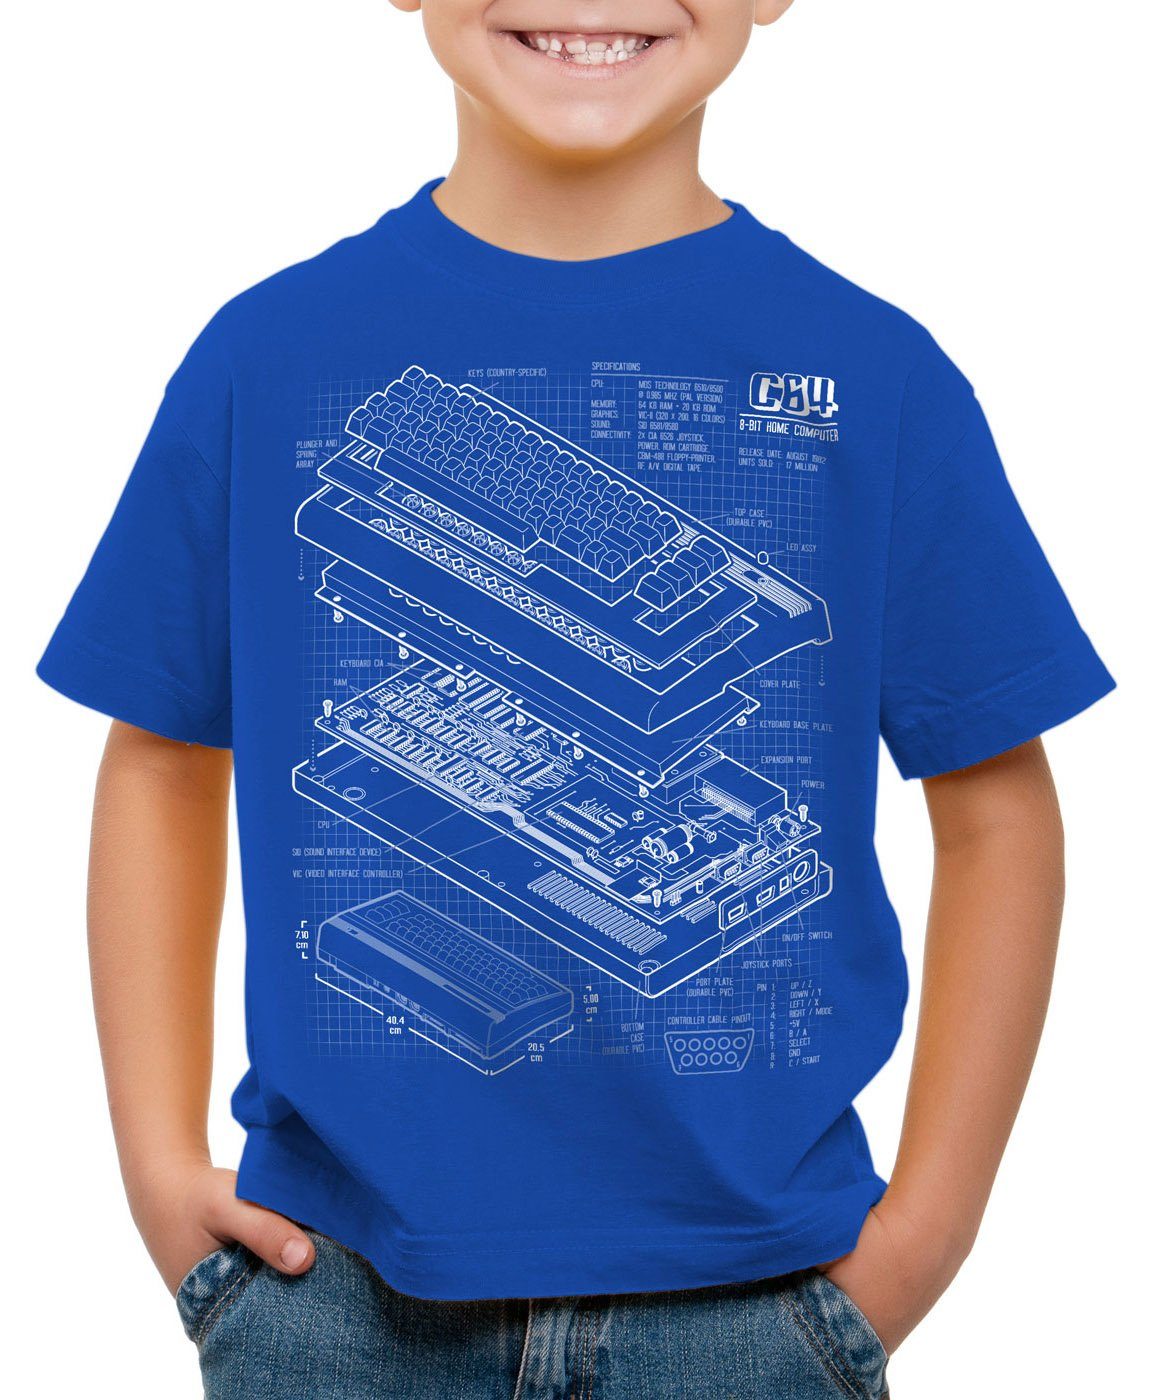 Print-Shirt classic T-Shirt Kinder C64 gamer style3 blau Heimcomputer